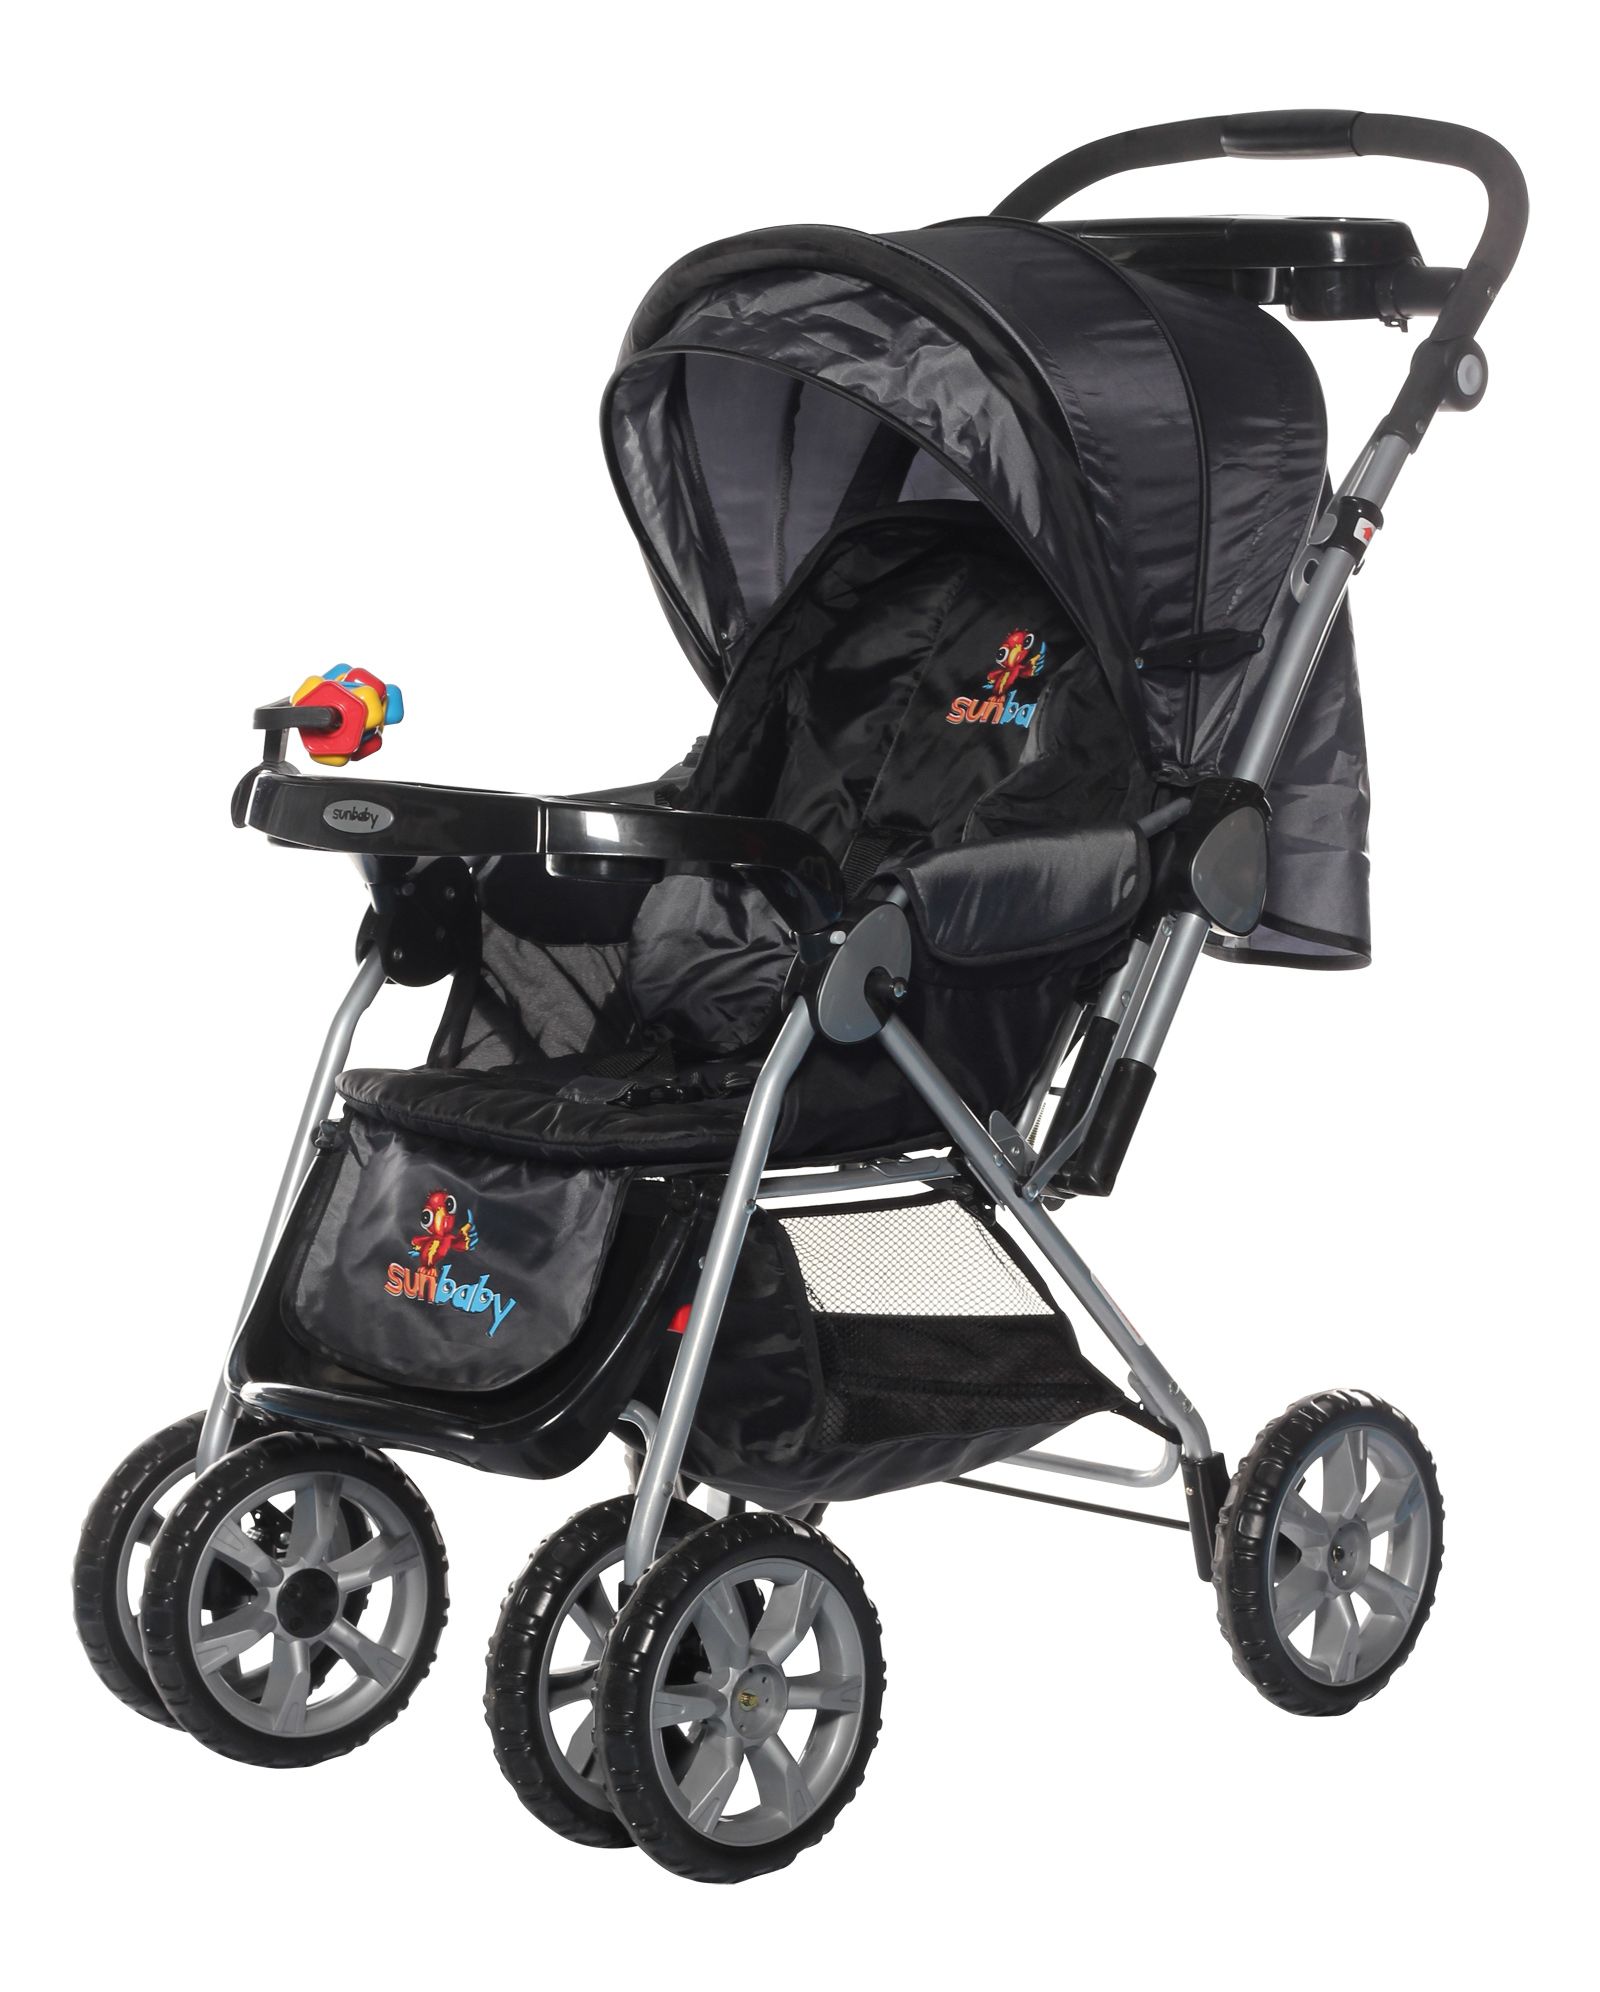 Sunbaby - Baby Stroller